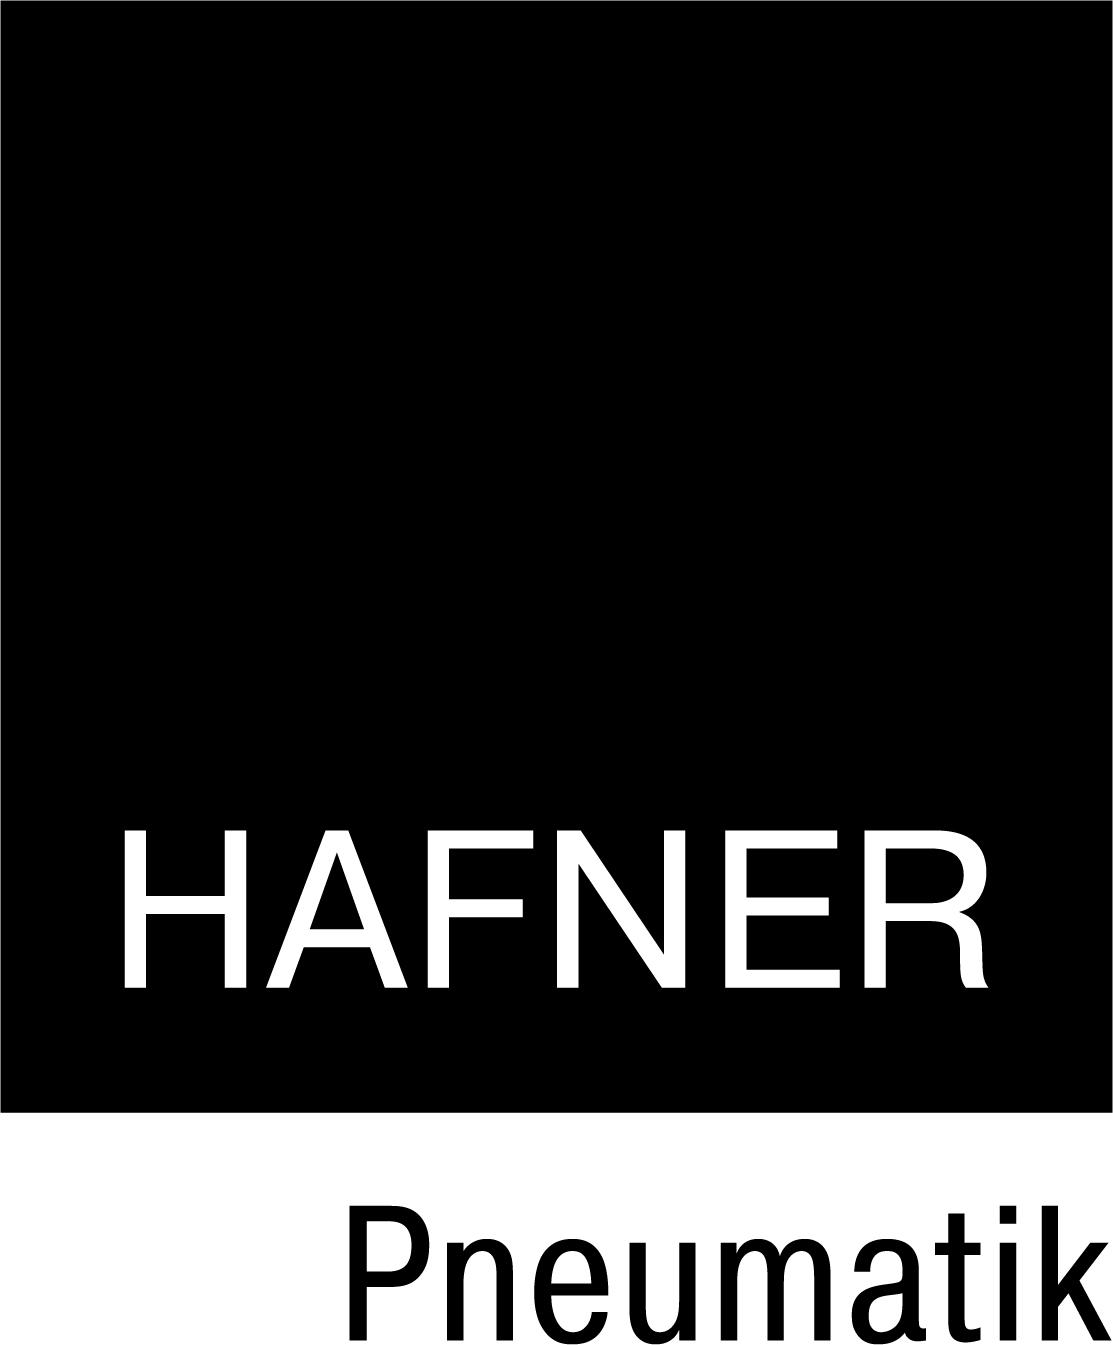 Hafner